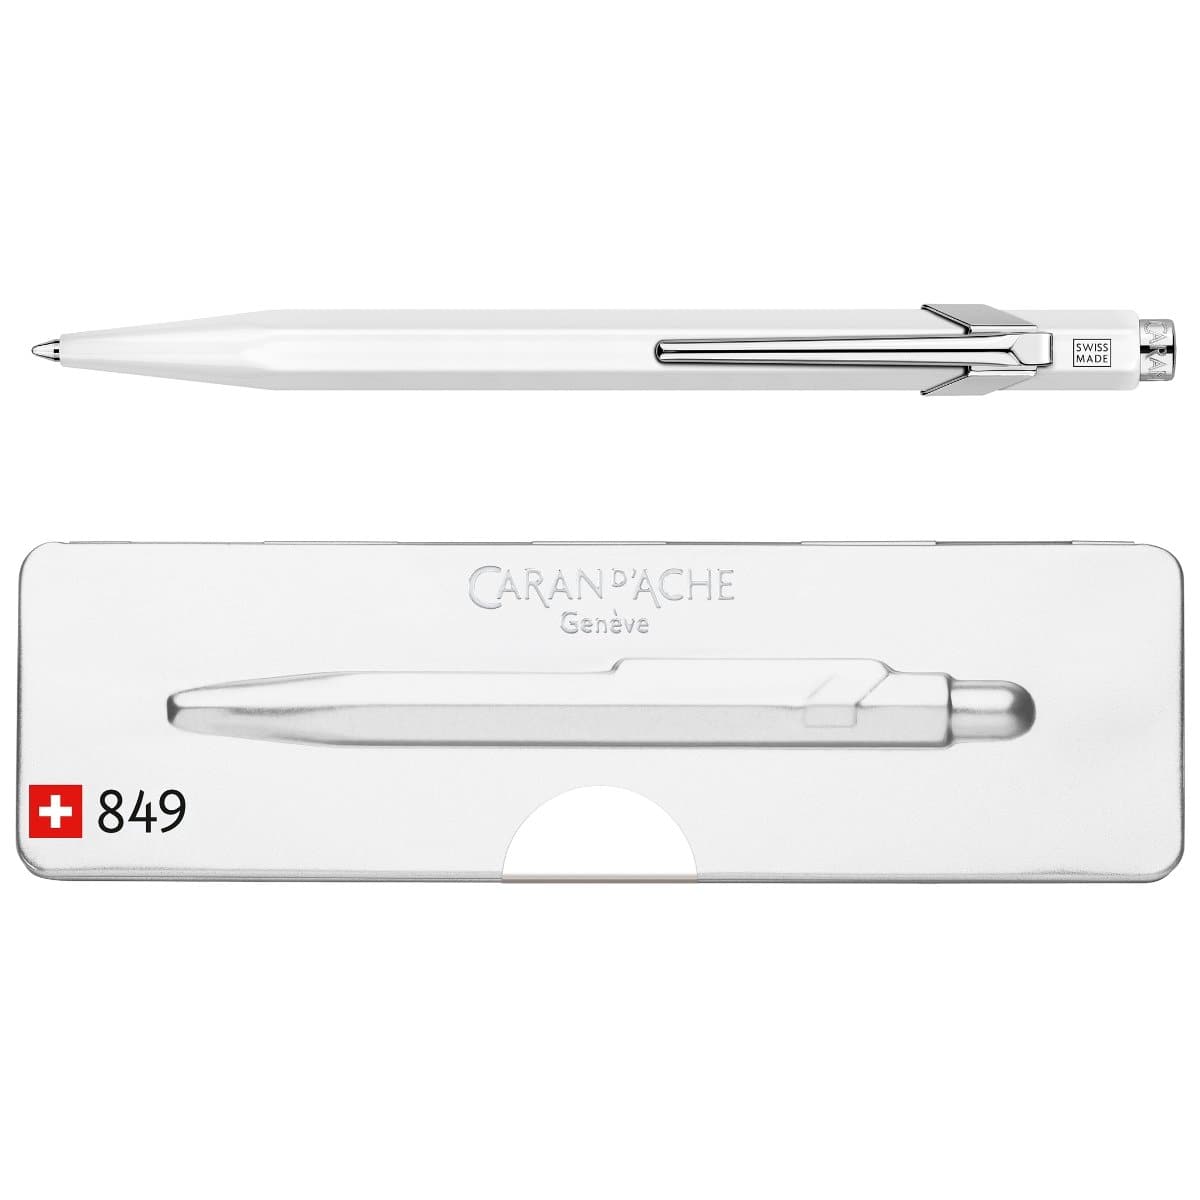 CARAN d'ACHE 849 Ballpoint Pen with Box, 0.25mm, White